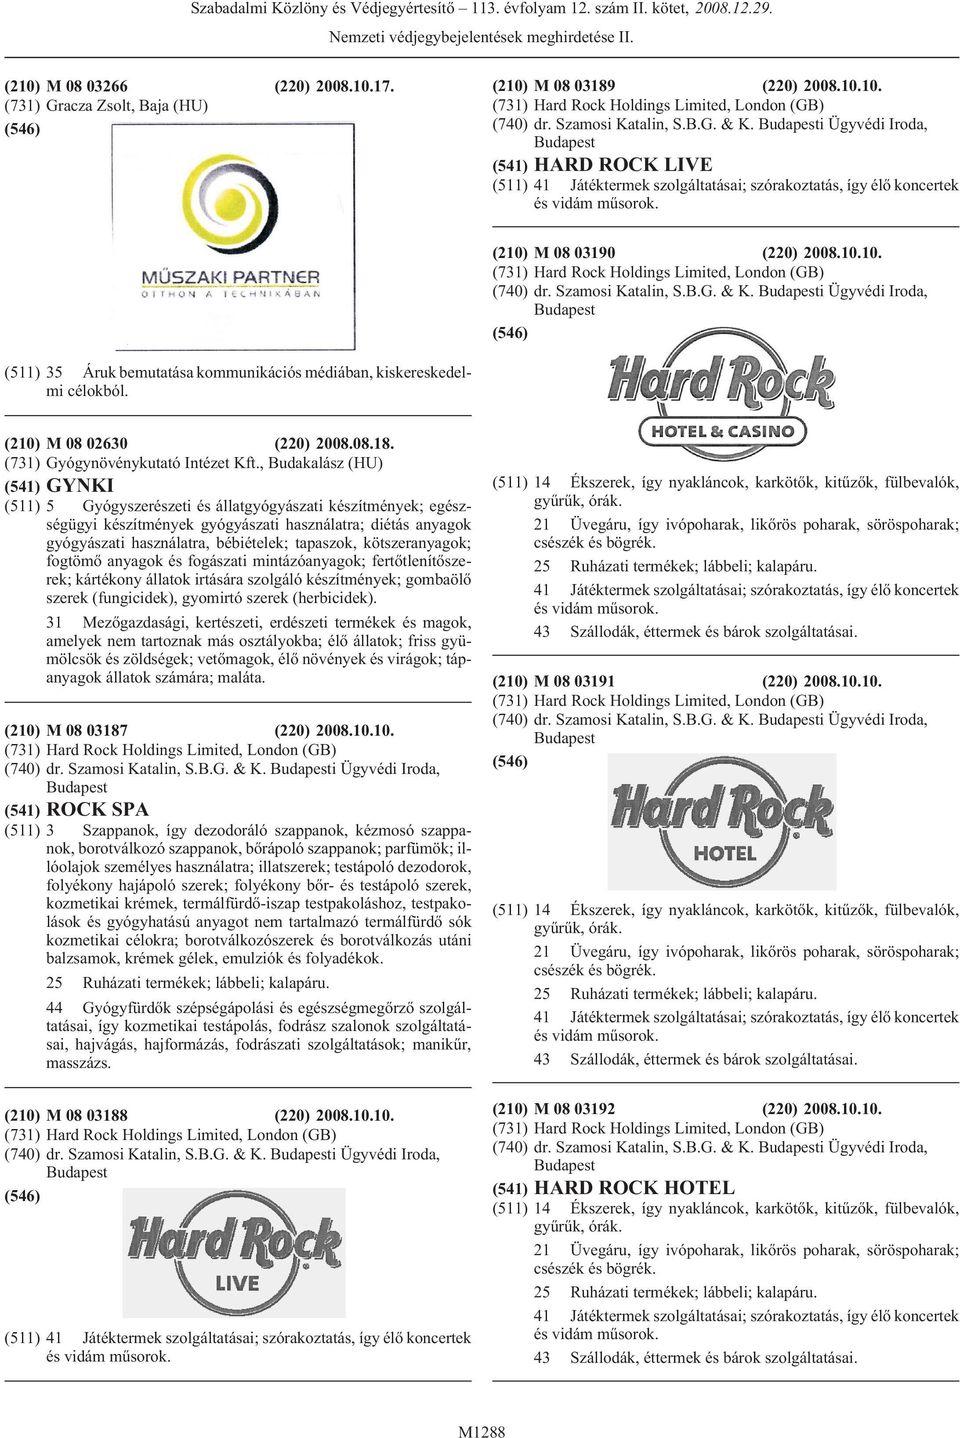 M 08 03190 (220) 2008.10.10. (731) Hard Rock Holdings Limited, London (GB) (740) dr. Szamosi Katalin, S.B.G. & K.